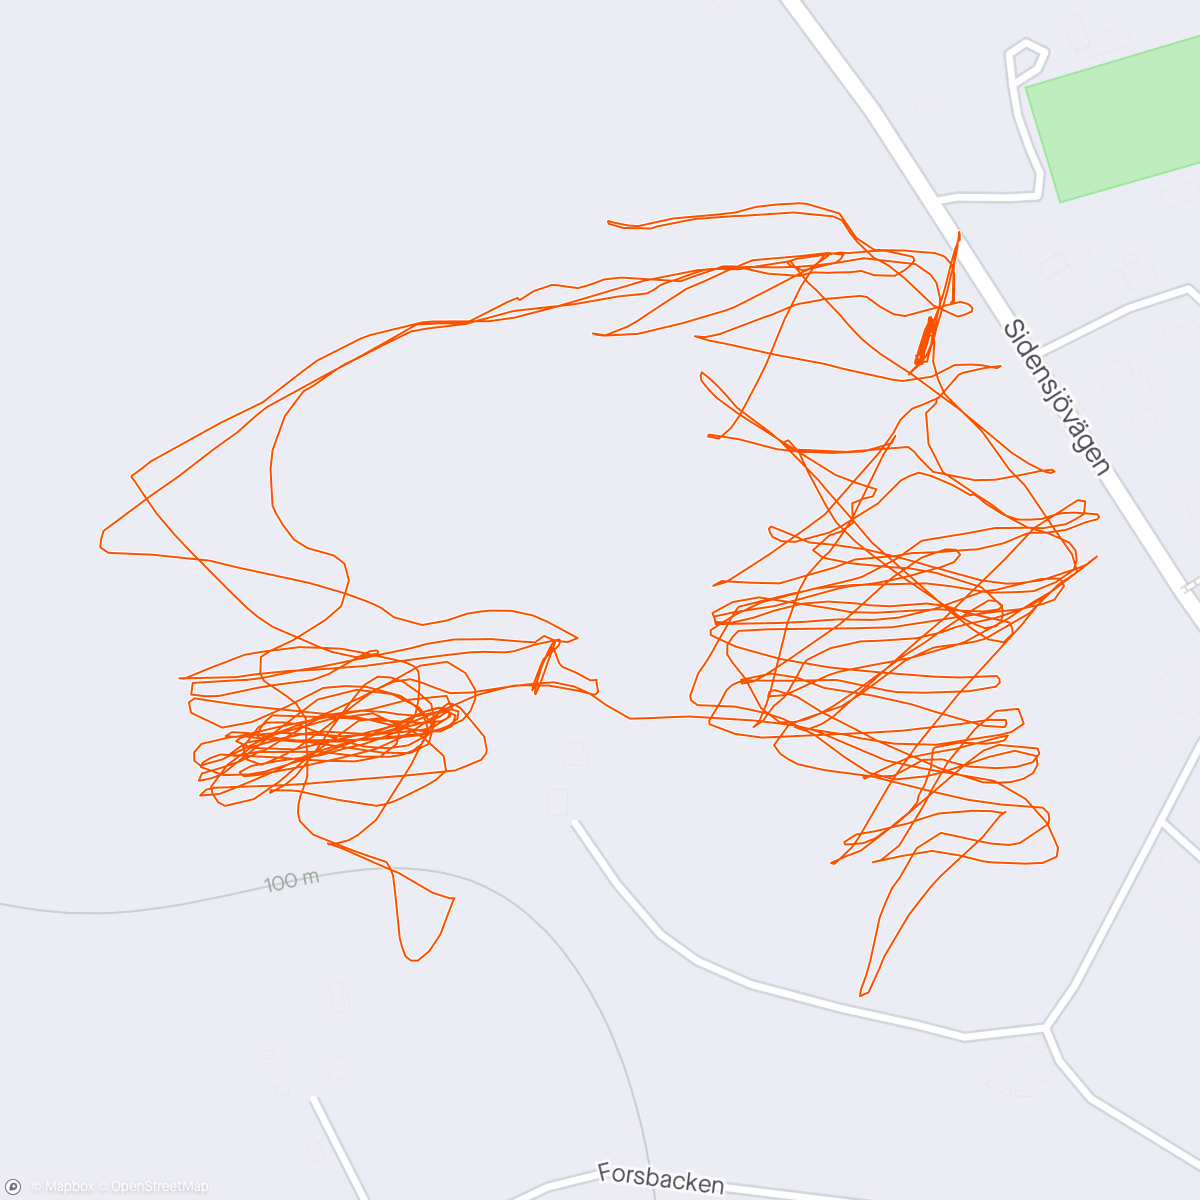 Map of the activity, Snowkite